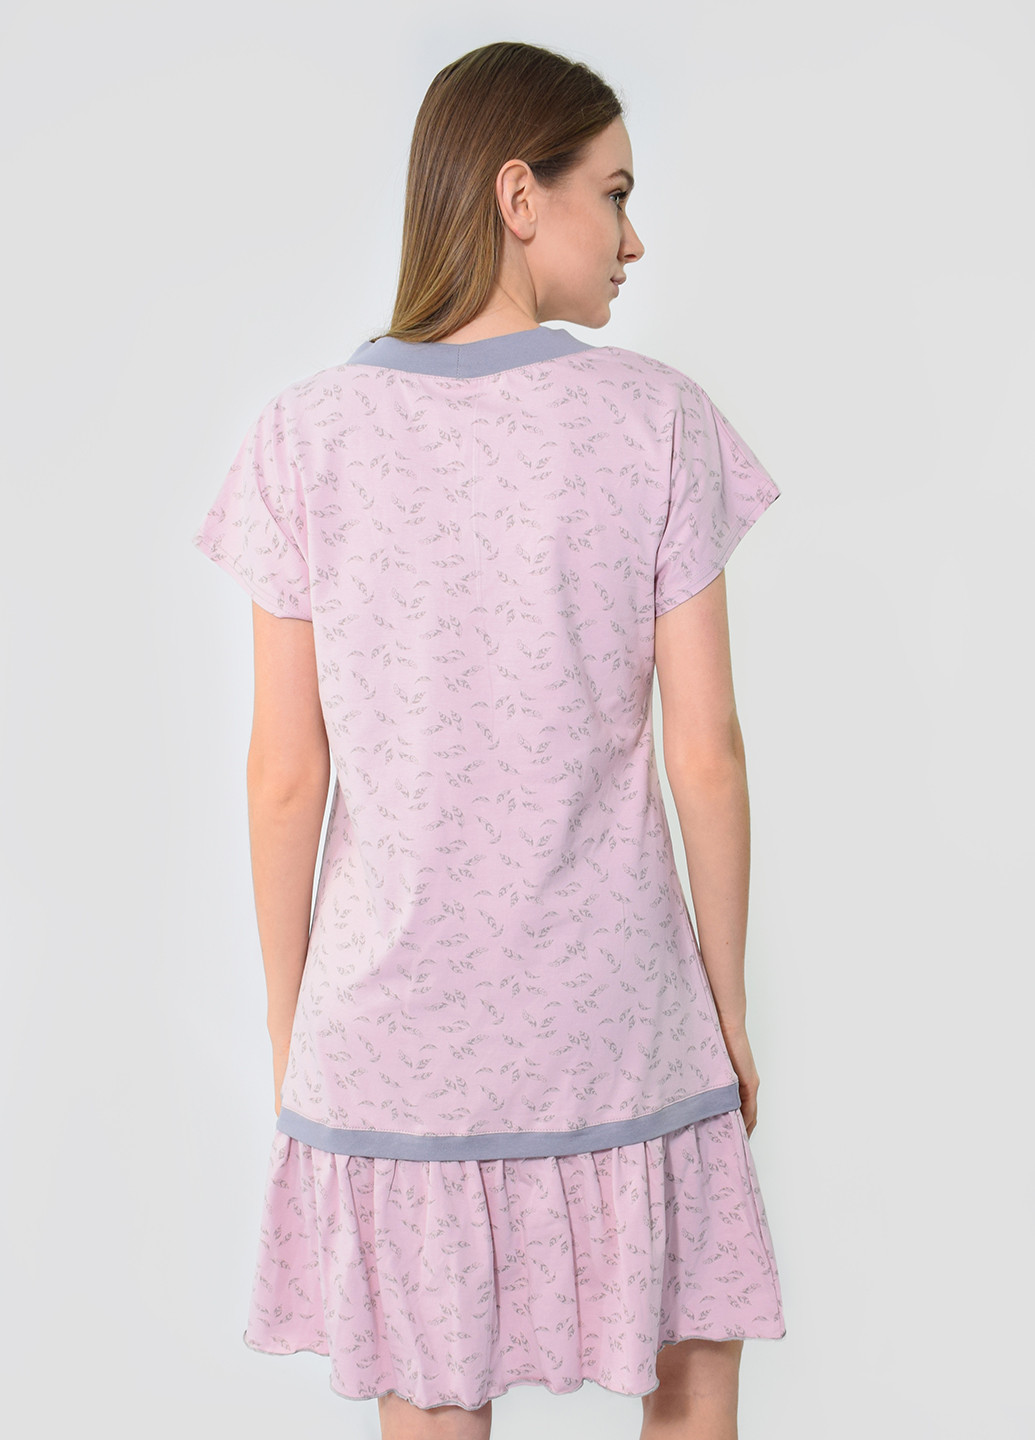 Ночная рубашка NEL рисунок светло-розовая домашняя